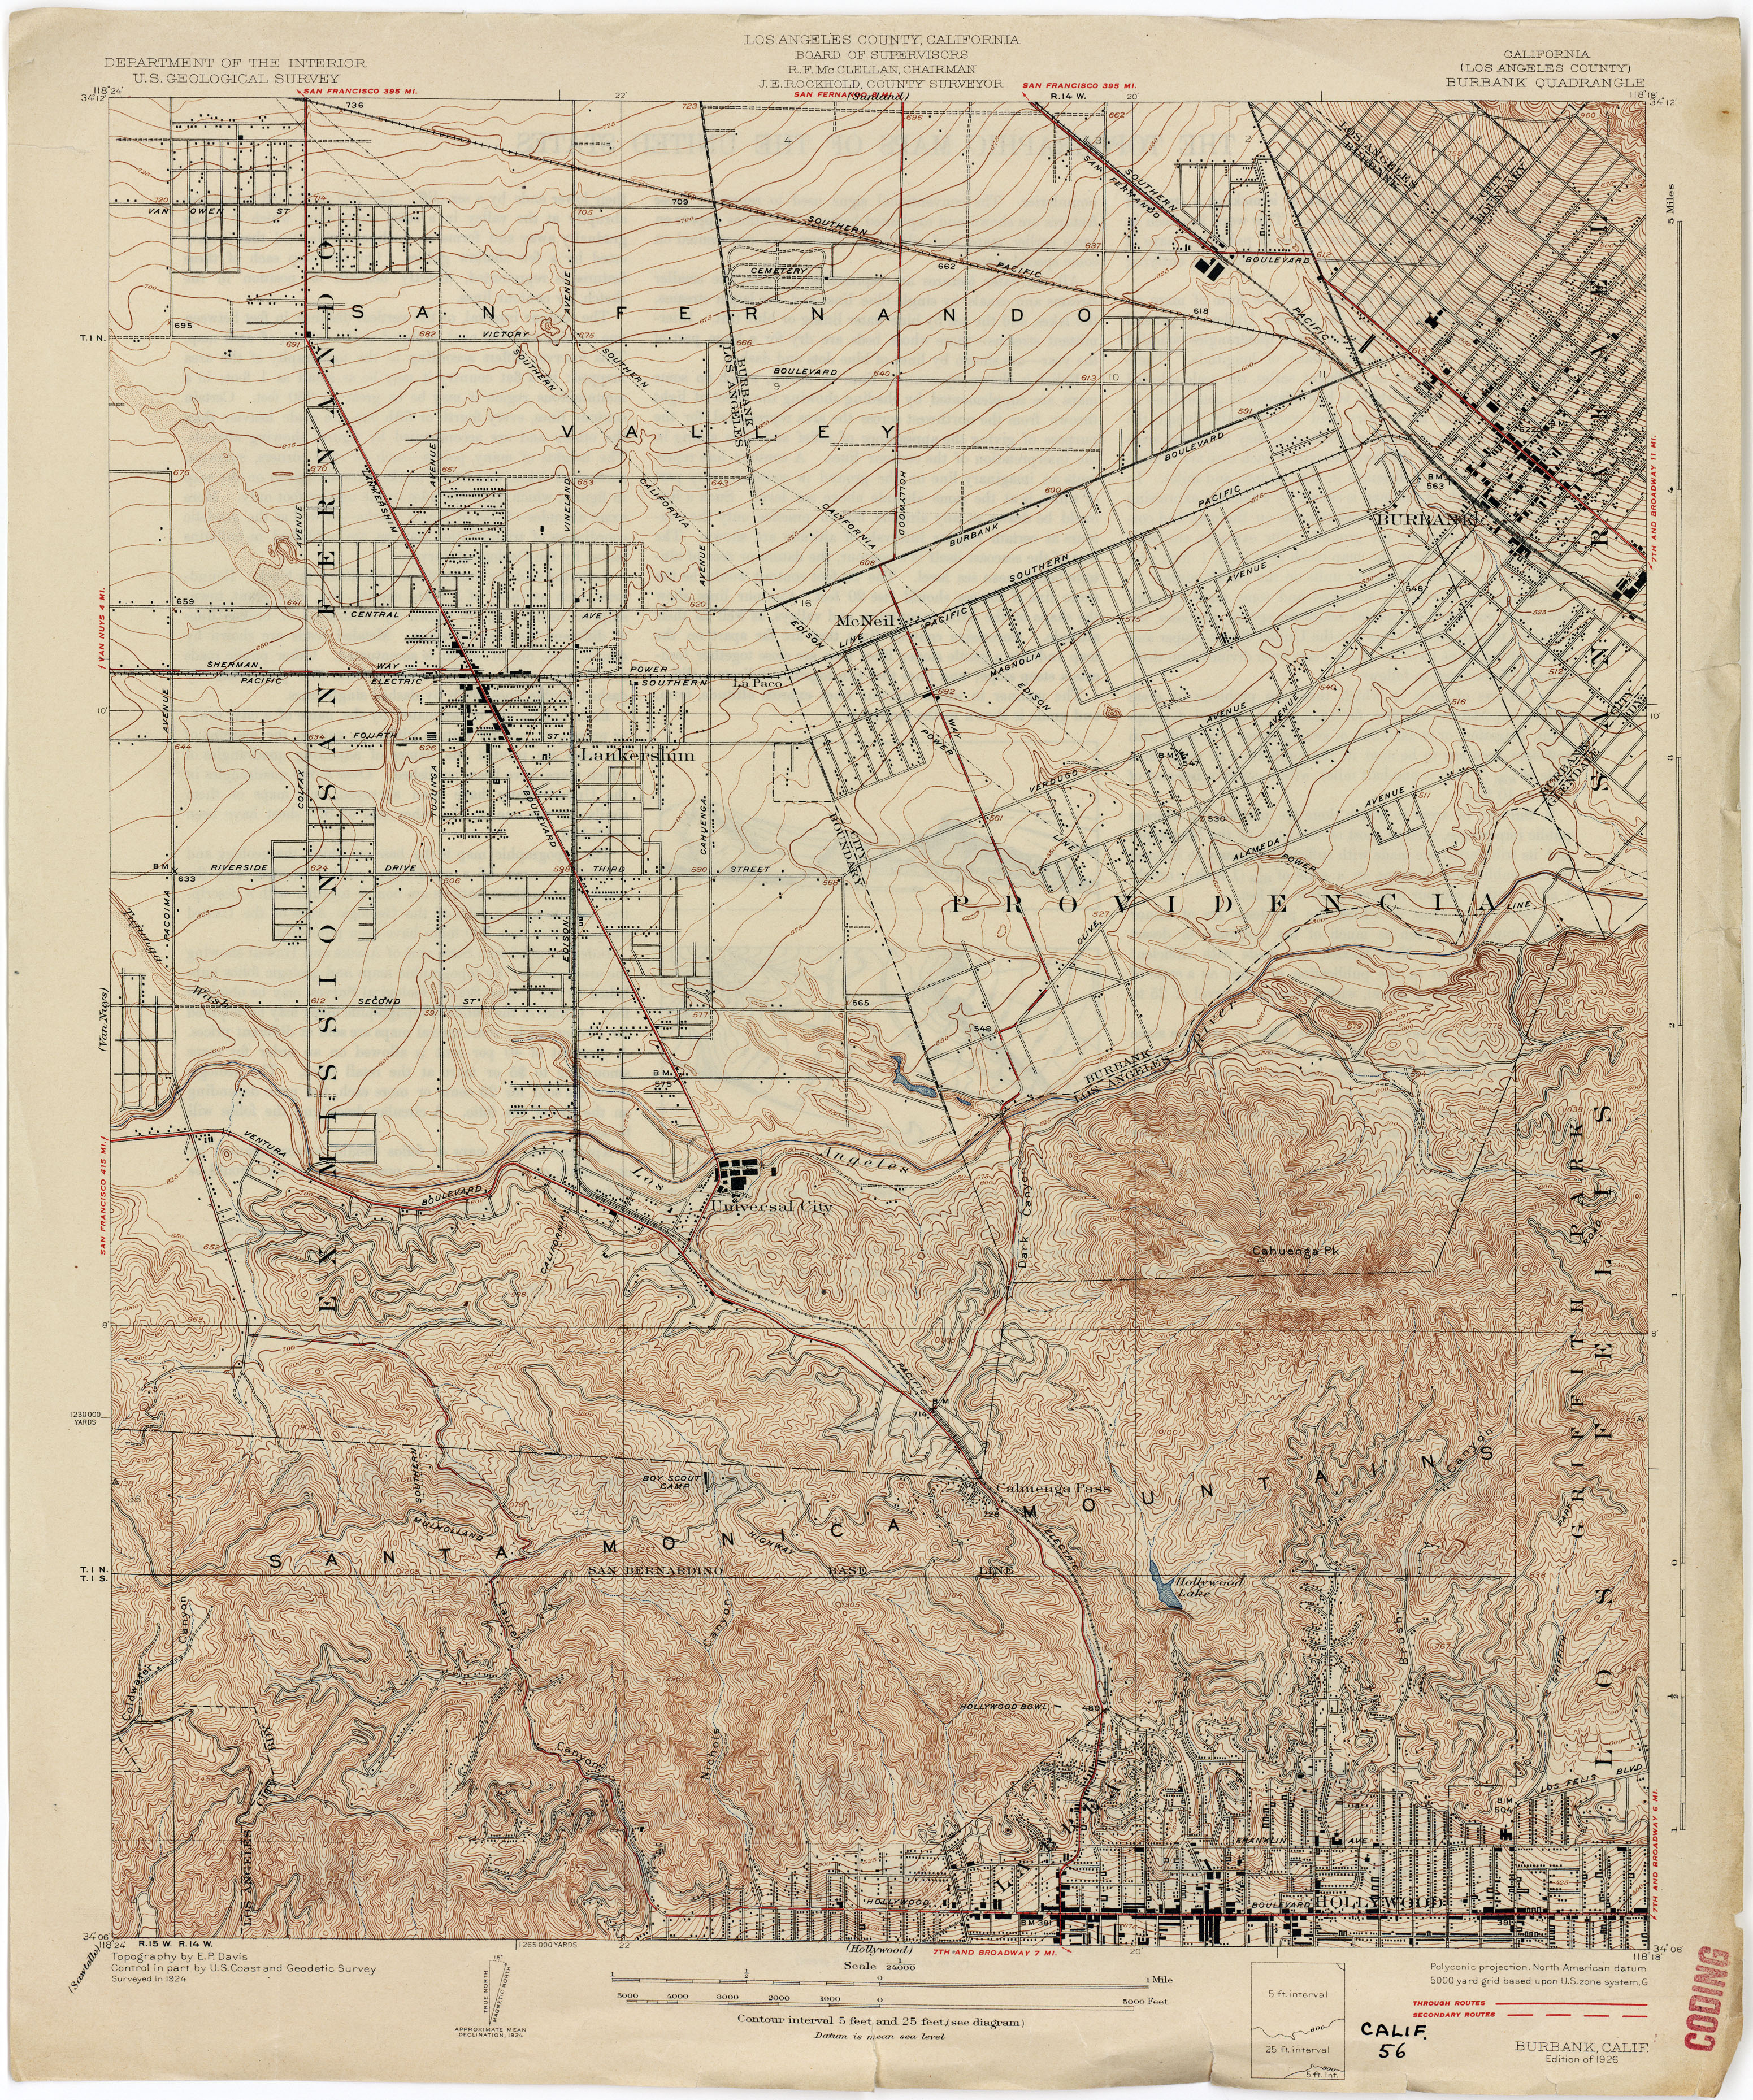 California Cities Old Map Reprint San Fernando Valley 1923